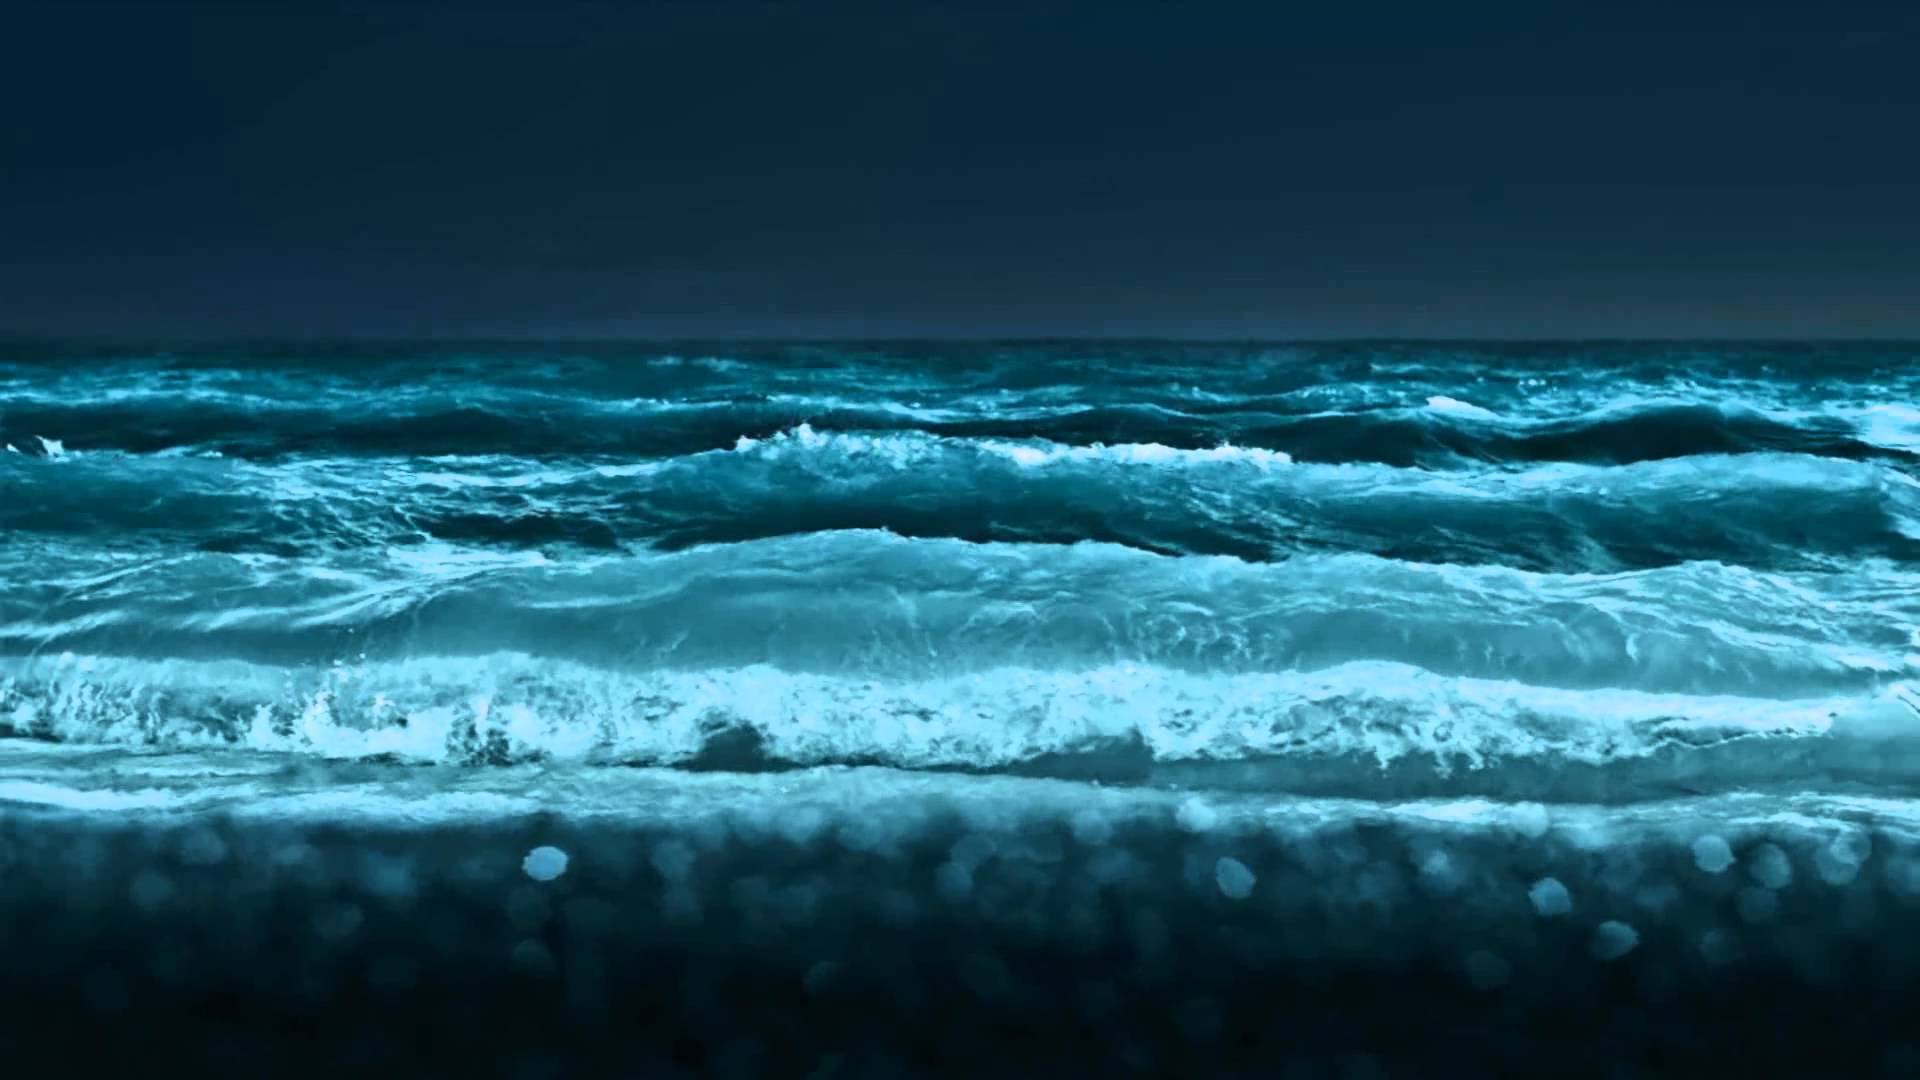 Desert Ocean Waves Wallpapers, Waves Wallpapers - Beach Waves At Night - HD Wallpaper 